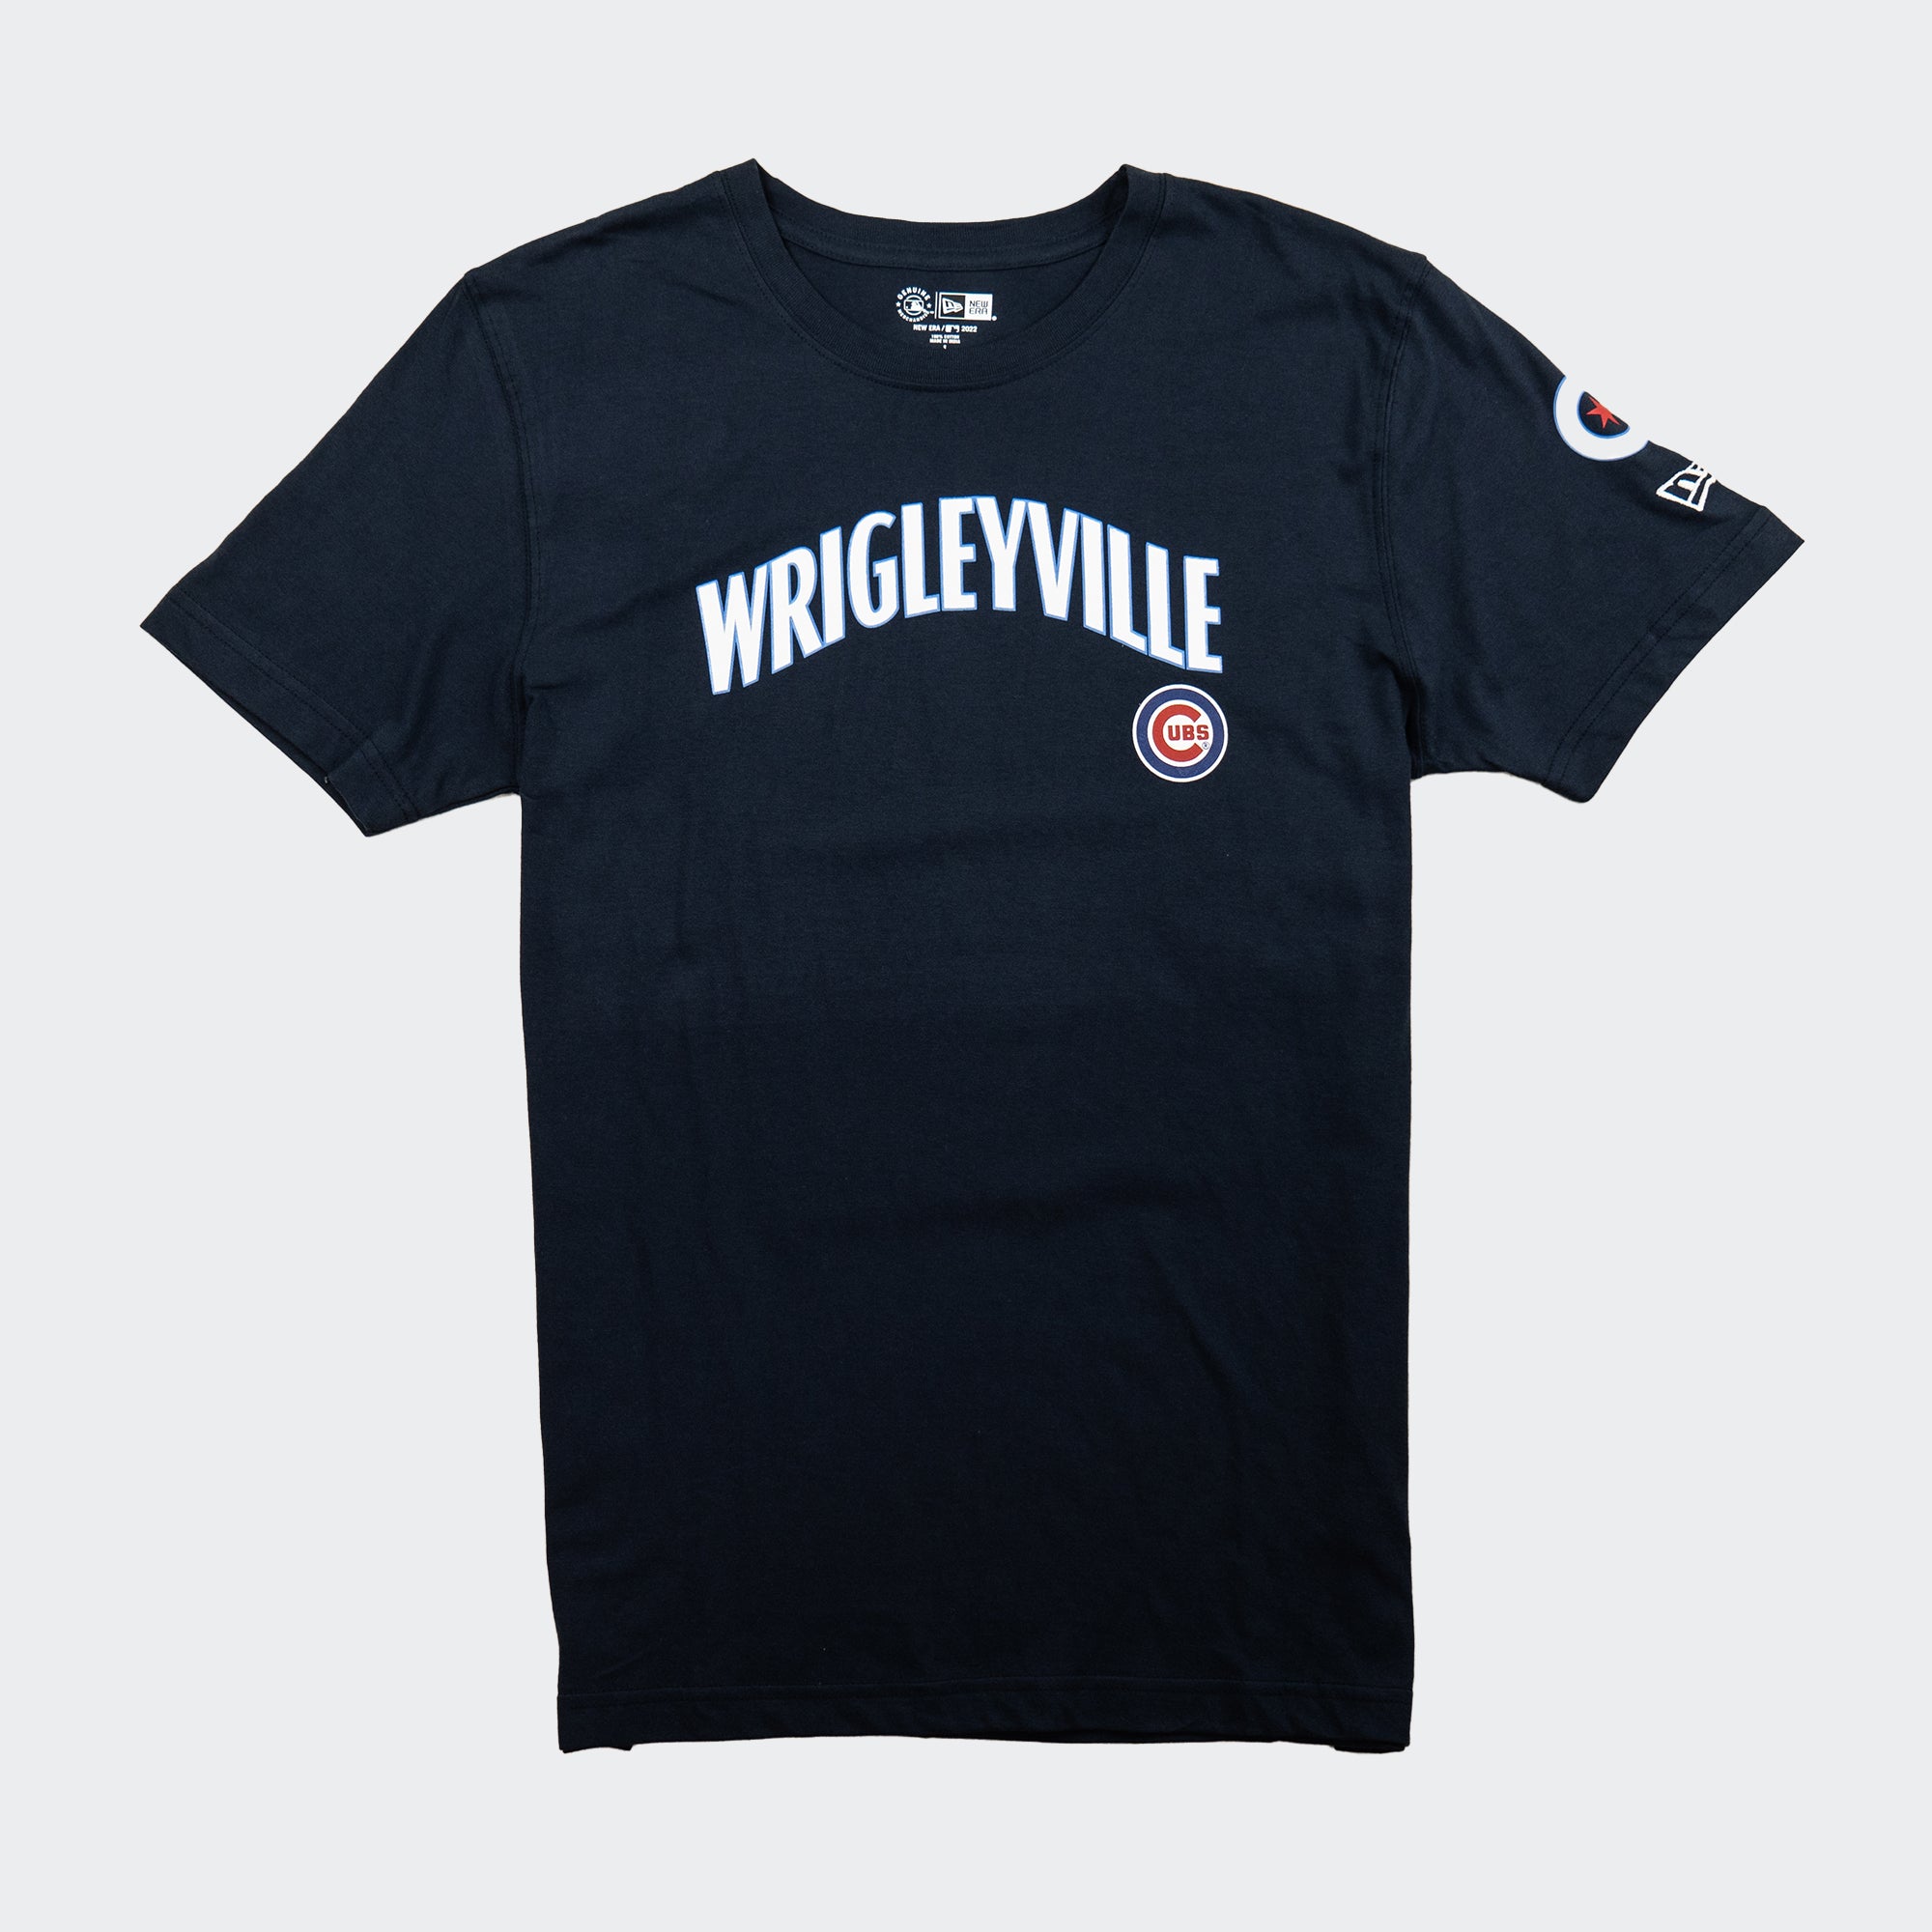 wrigleyville jersey